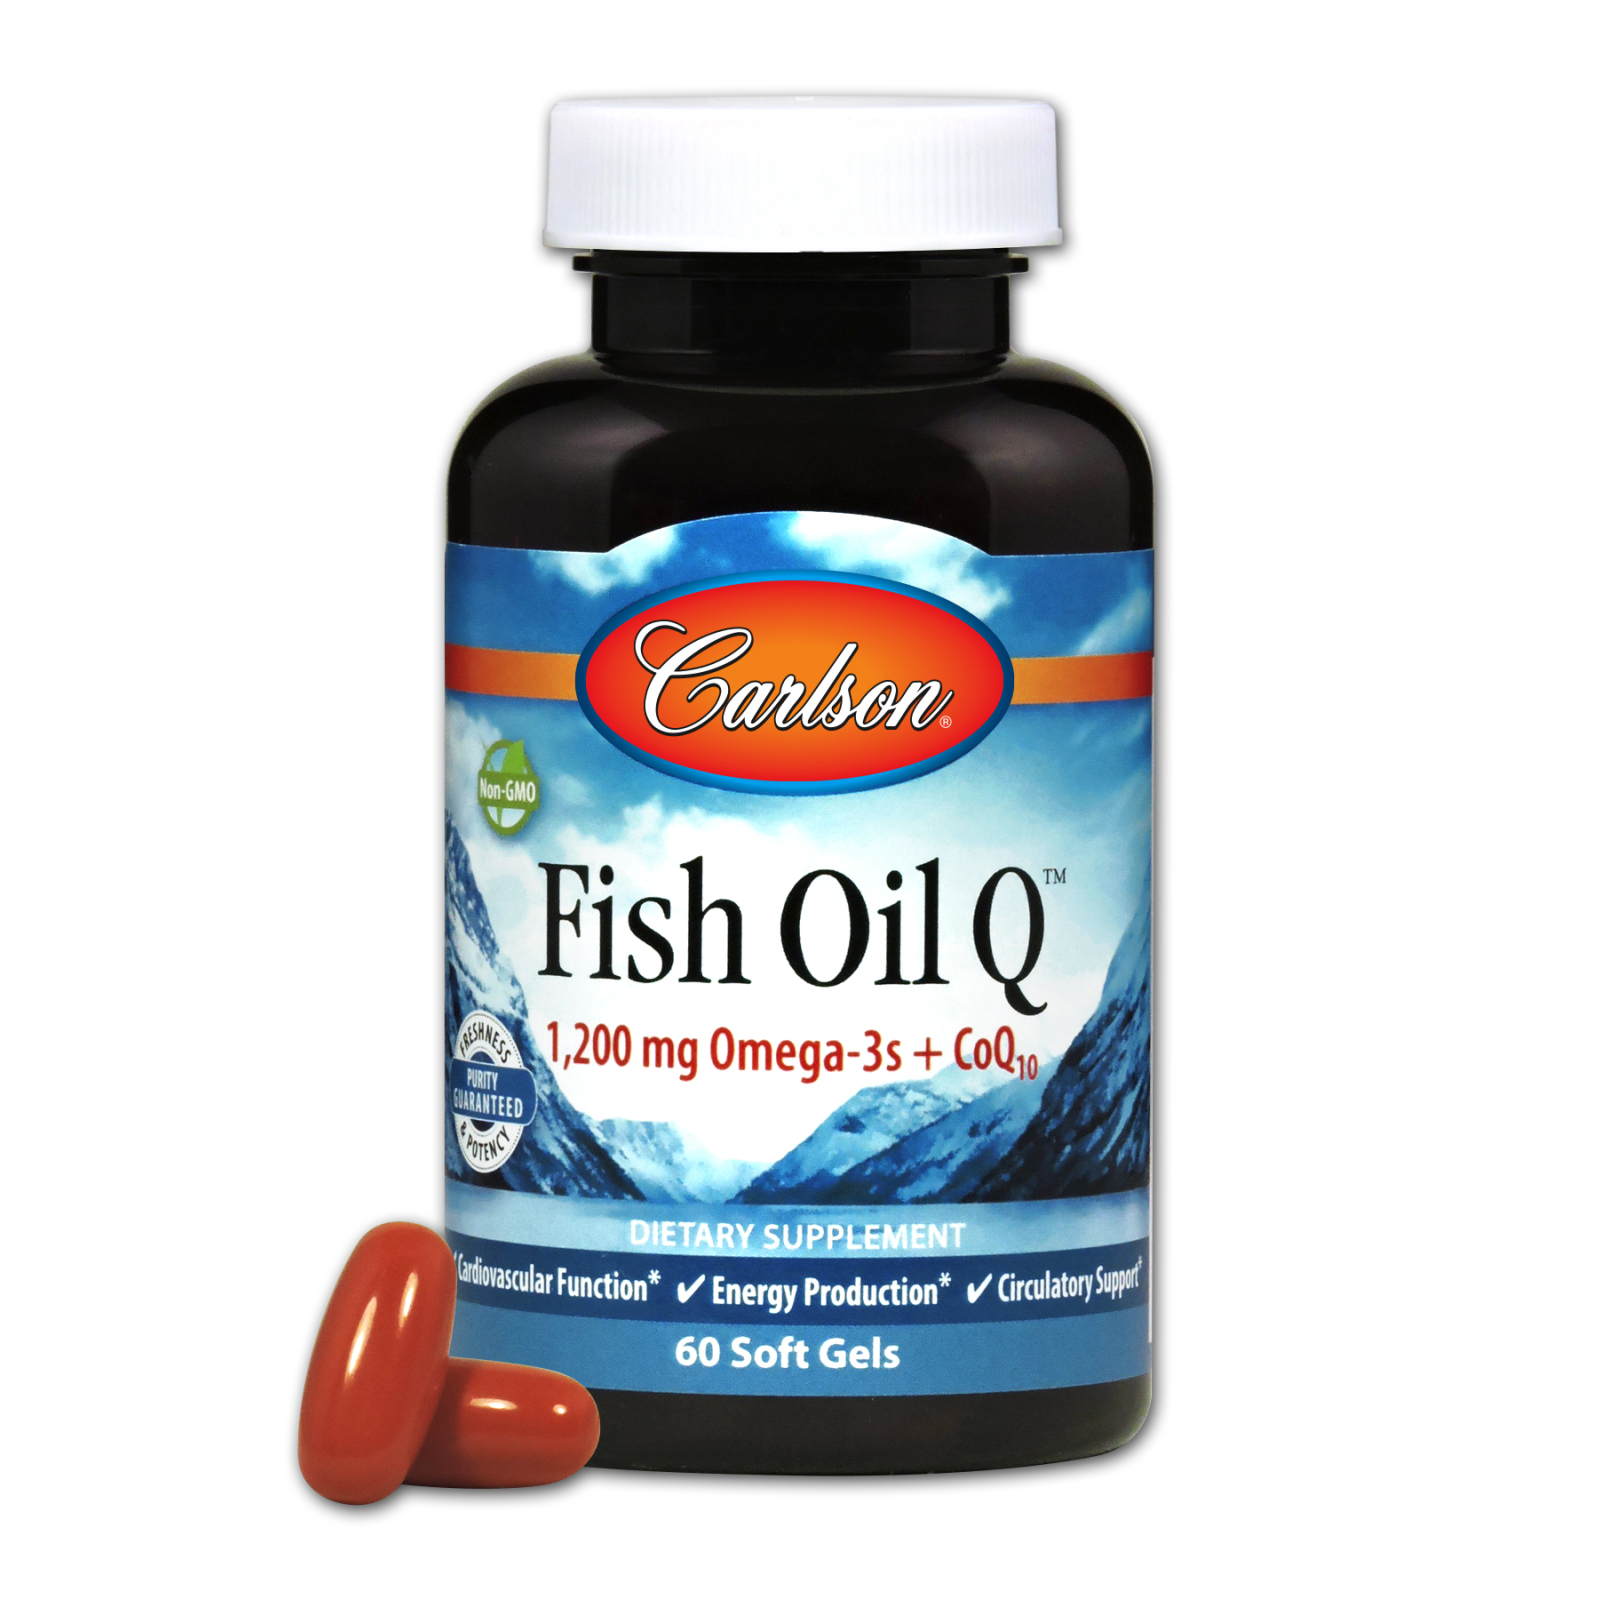 Антиоксидант Carlson Омега-3 + Коэнзим Q10, Fish Oil Q, 60 гелевых капсул (CL1673)